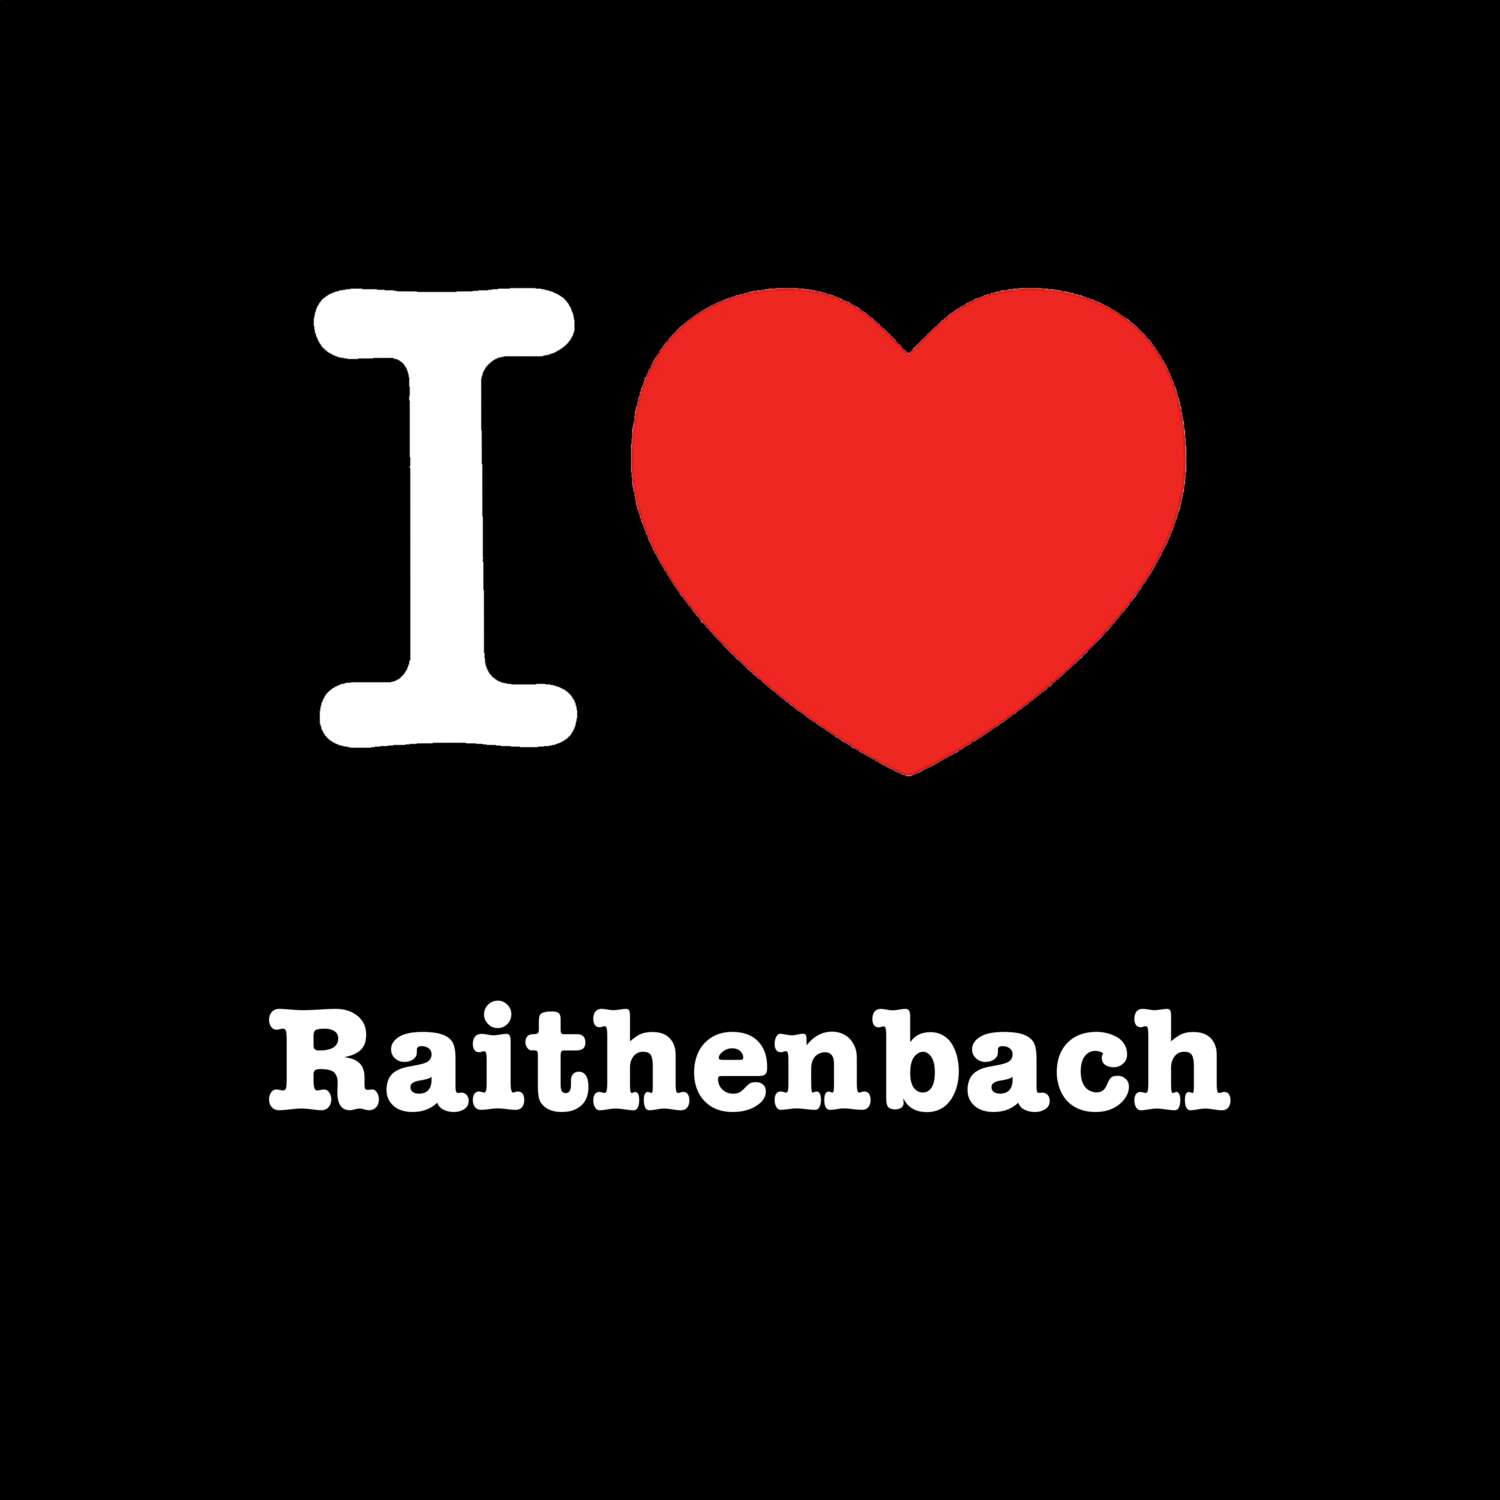 Raithenbach T-Shirt »I love«